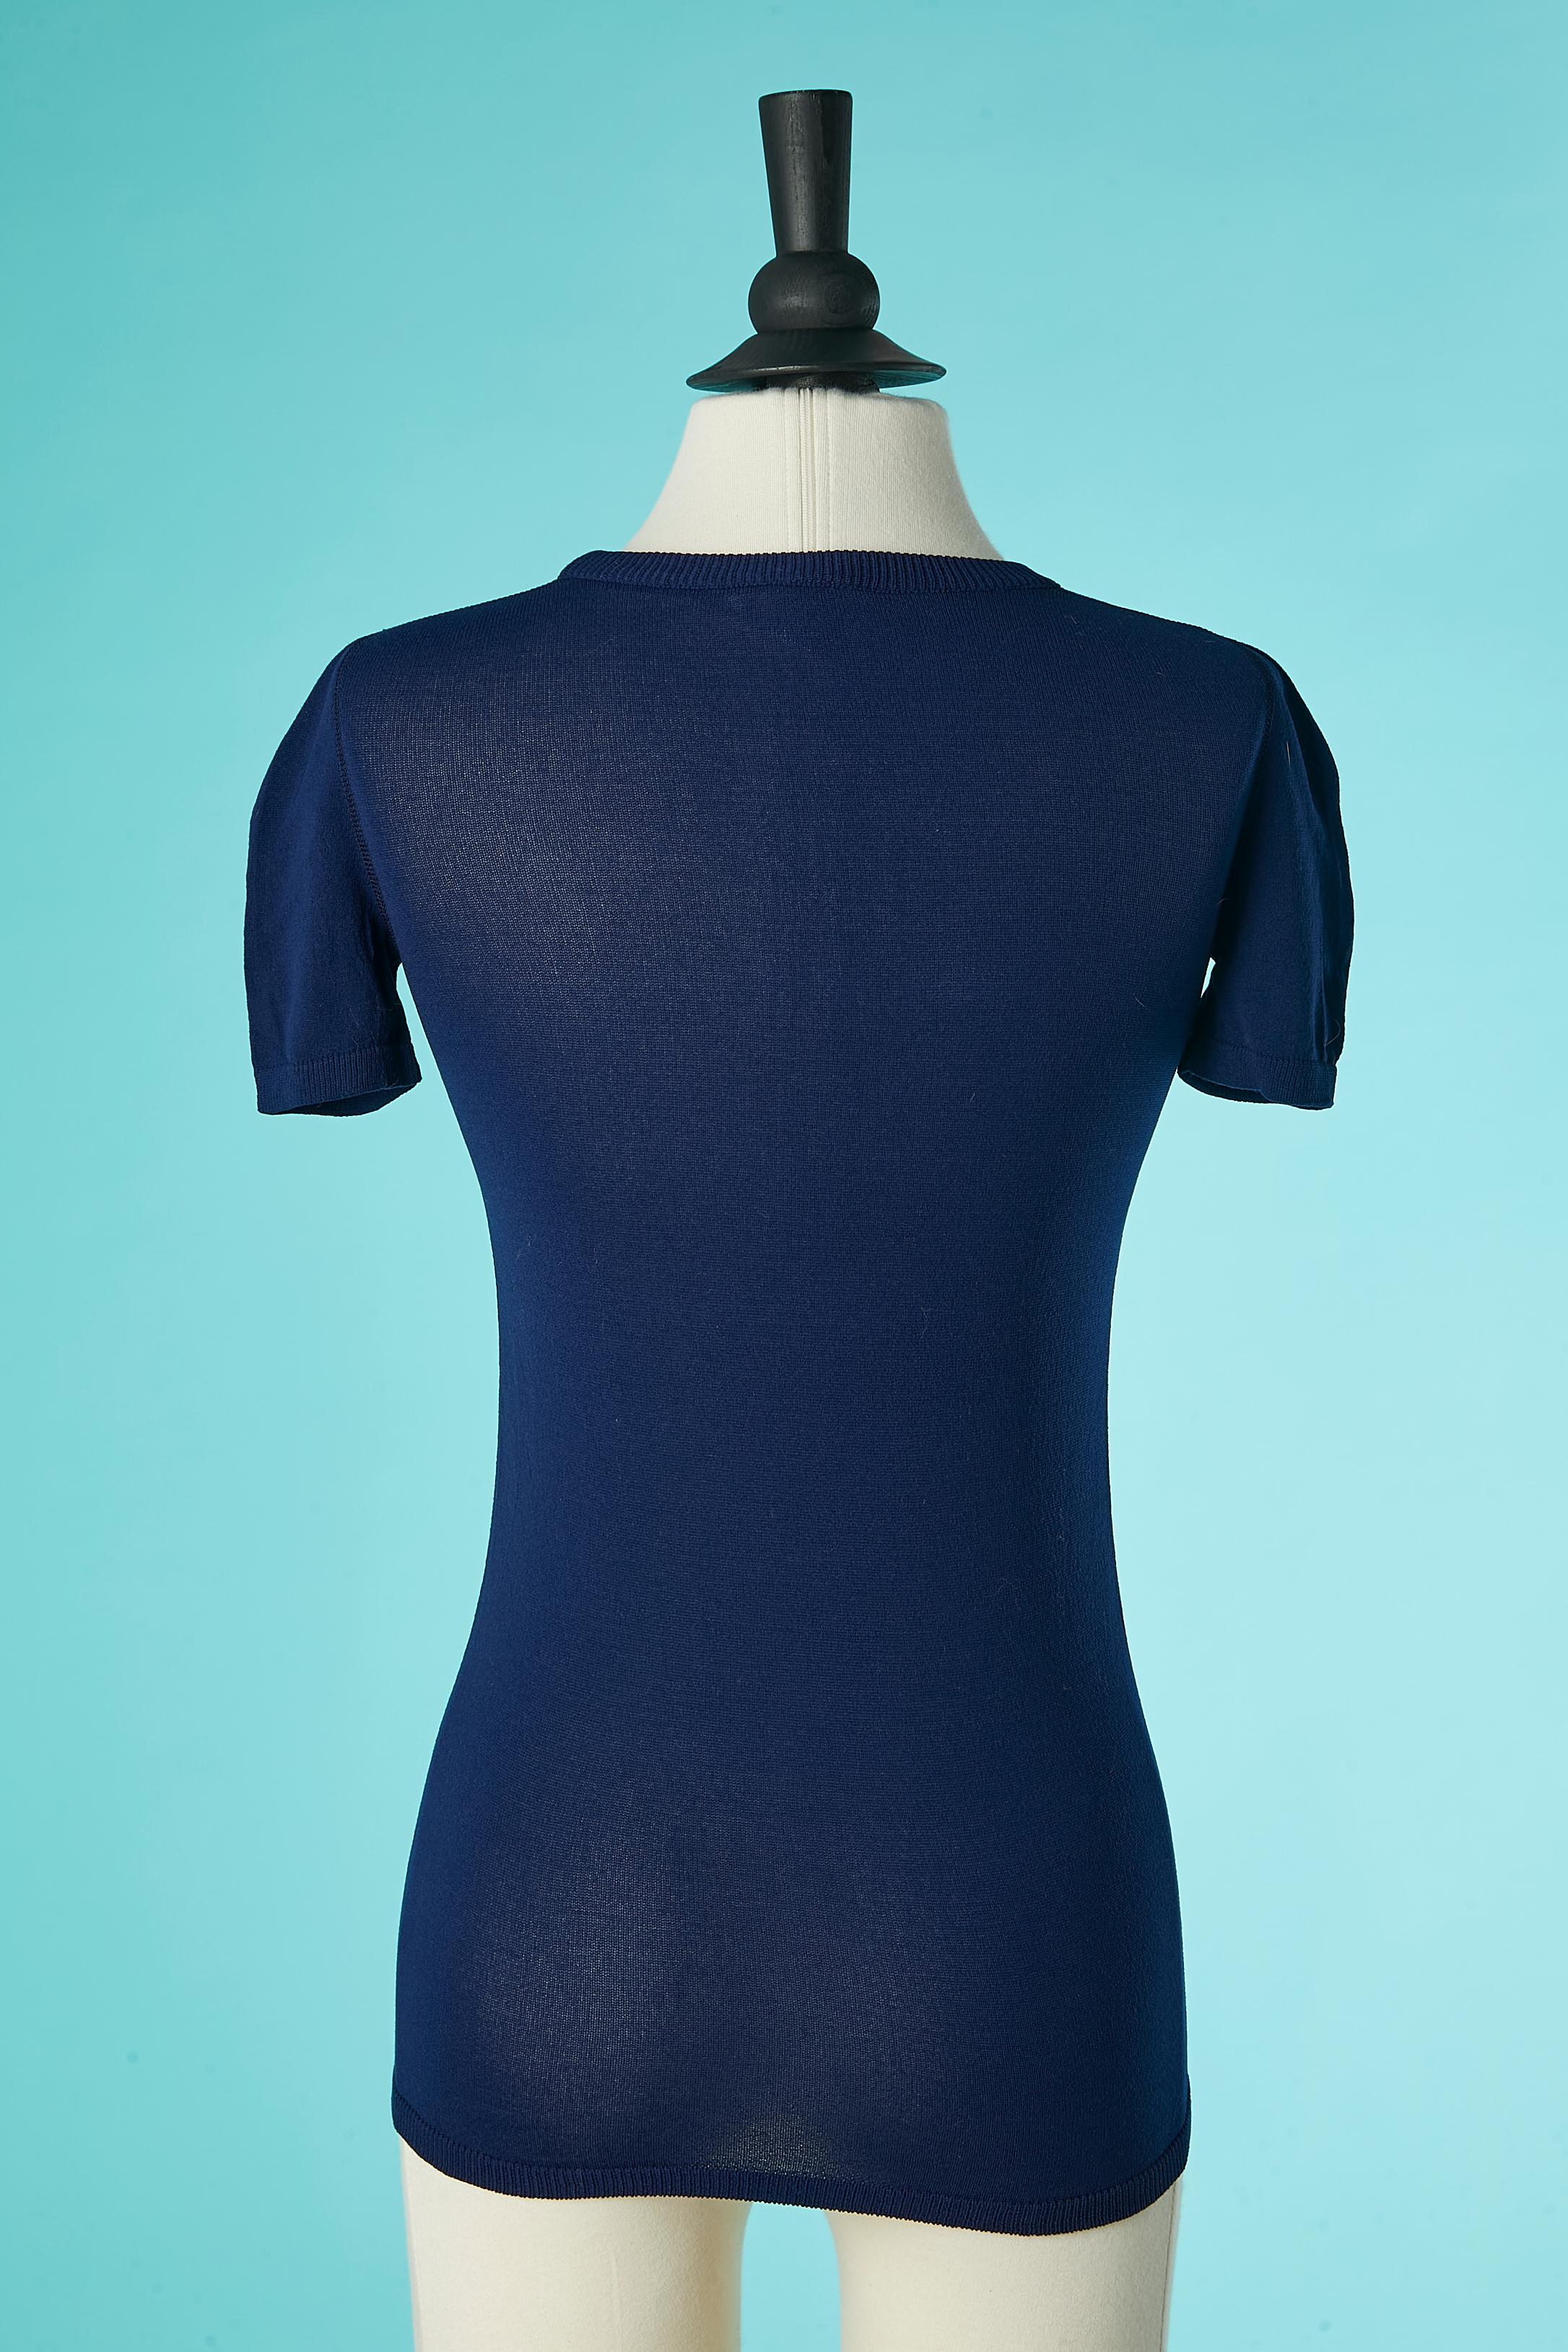 Women's or Men's Navy blue tee-shirt Courrèges Circa 1970's  For Sale